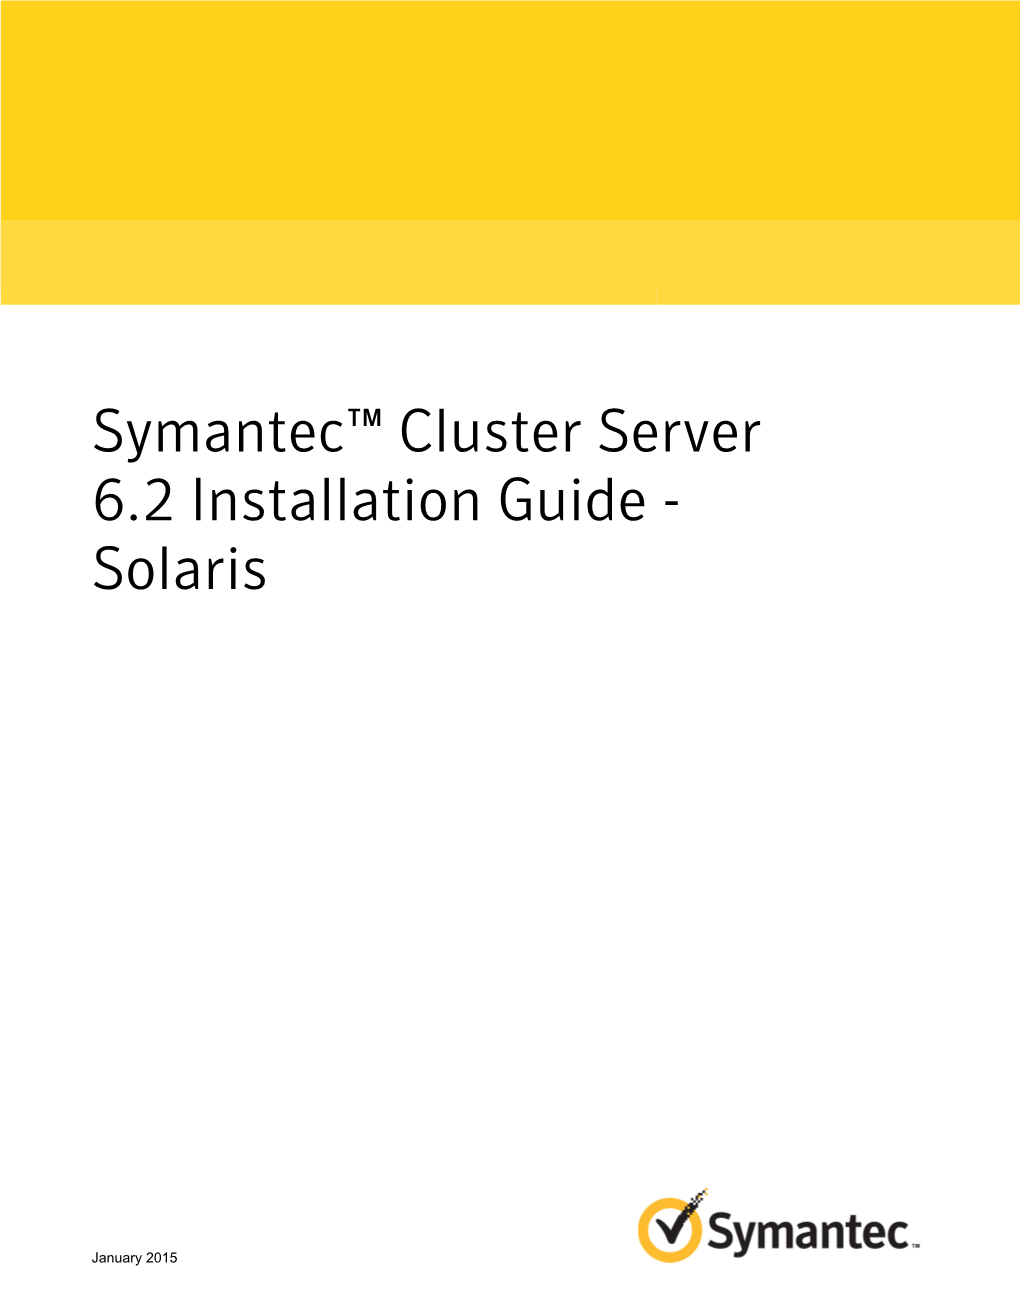 Symantec™ Cluster Server 6.2 Installation Guide - Solaris